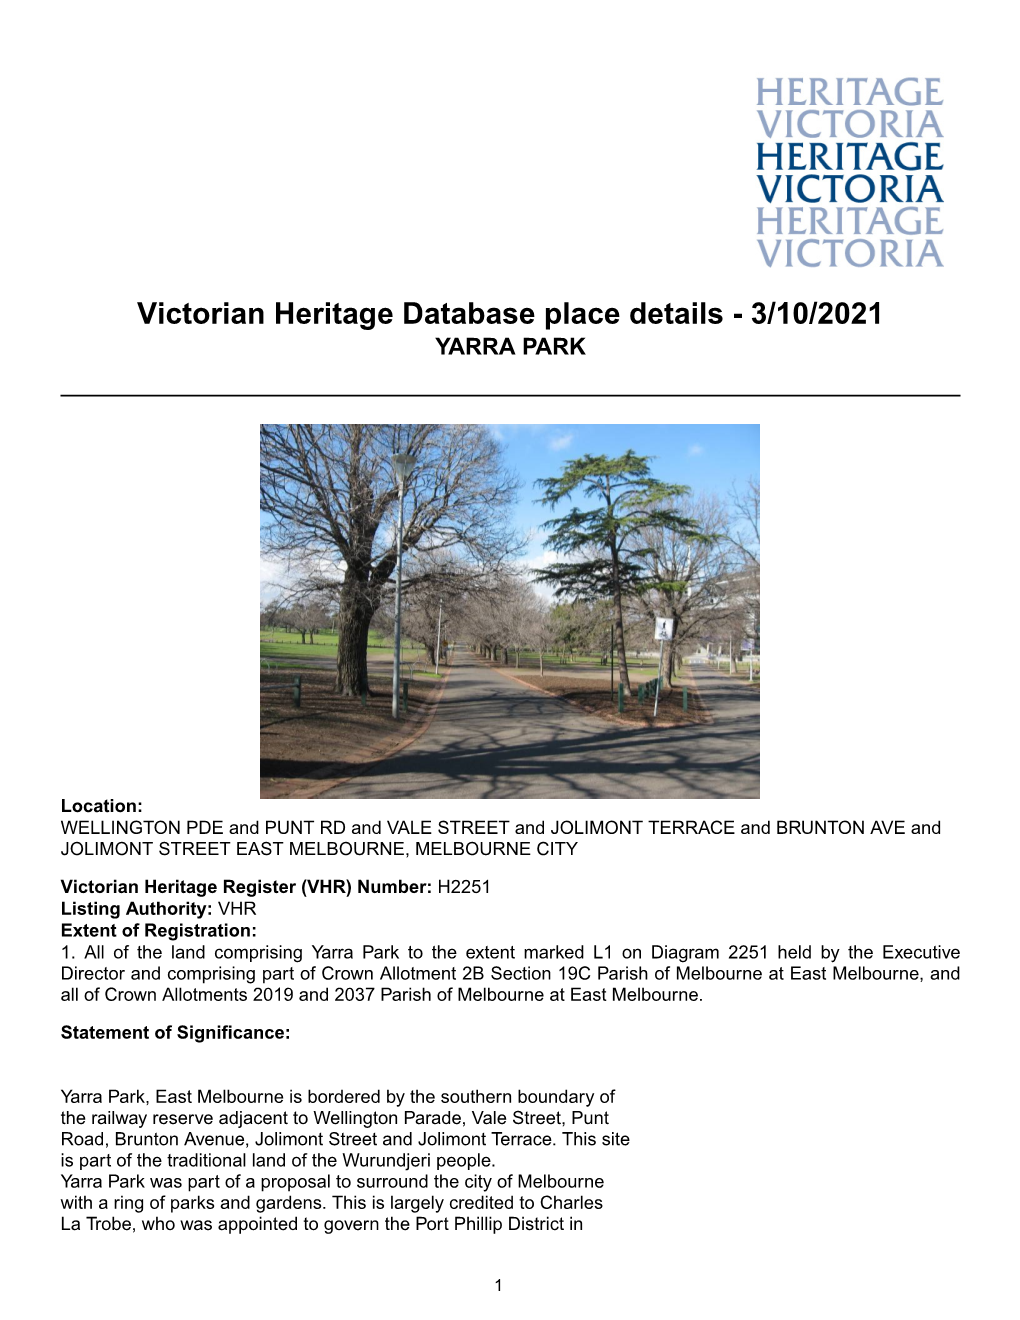 Victorian Heritage Database Place Details - 3/10/2021 YARRA PARK